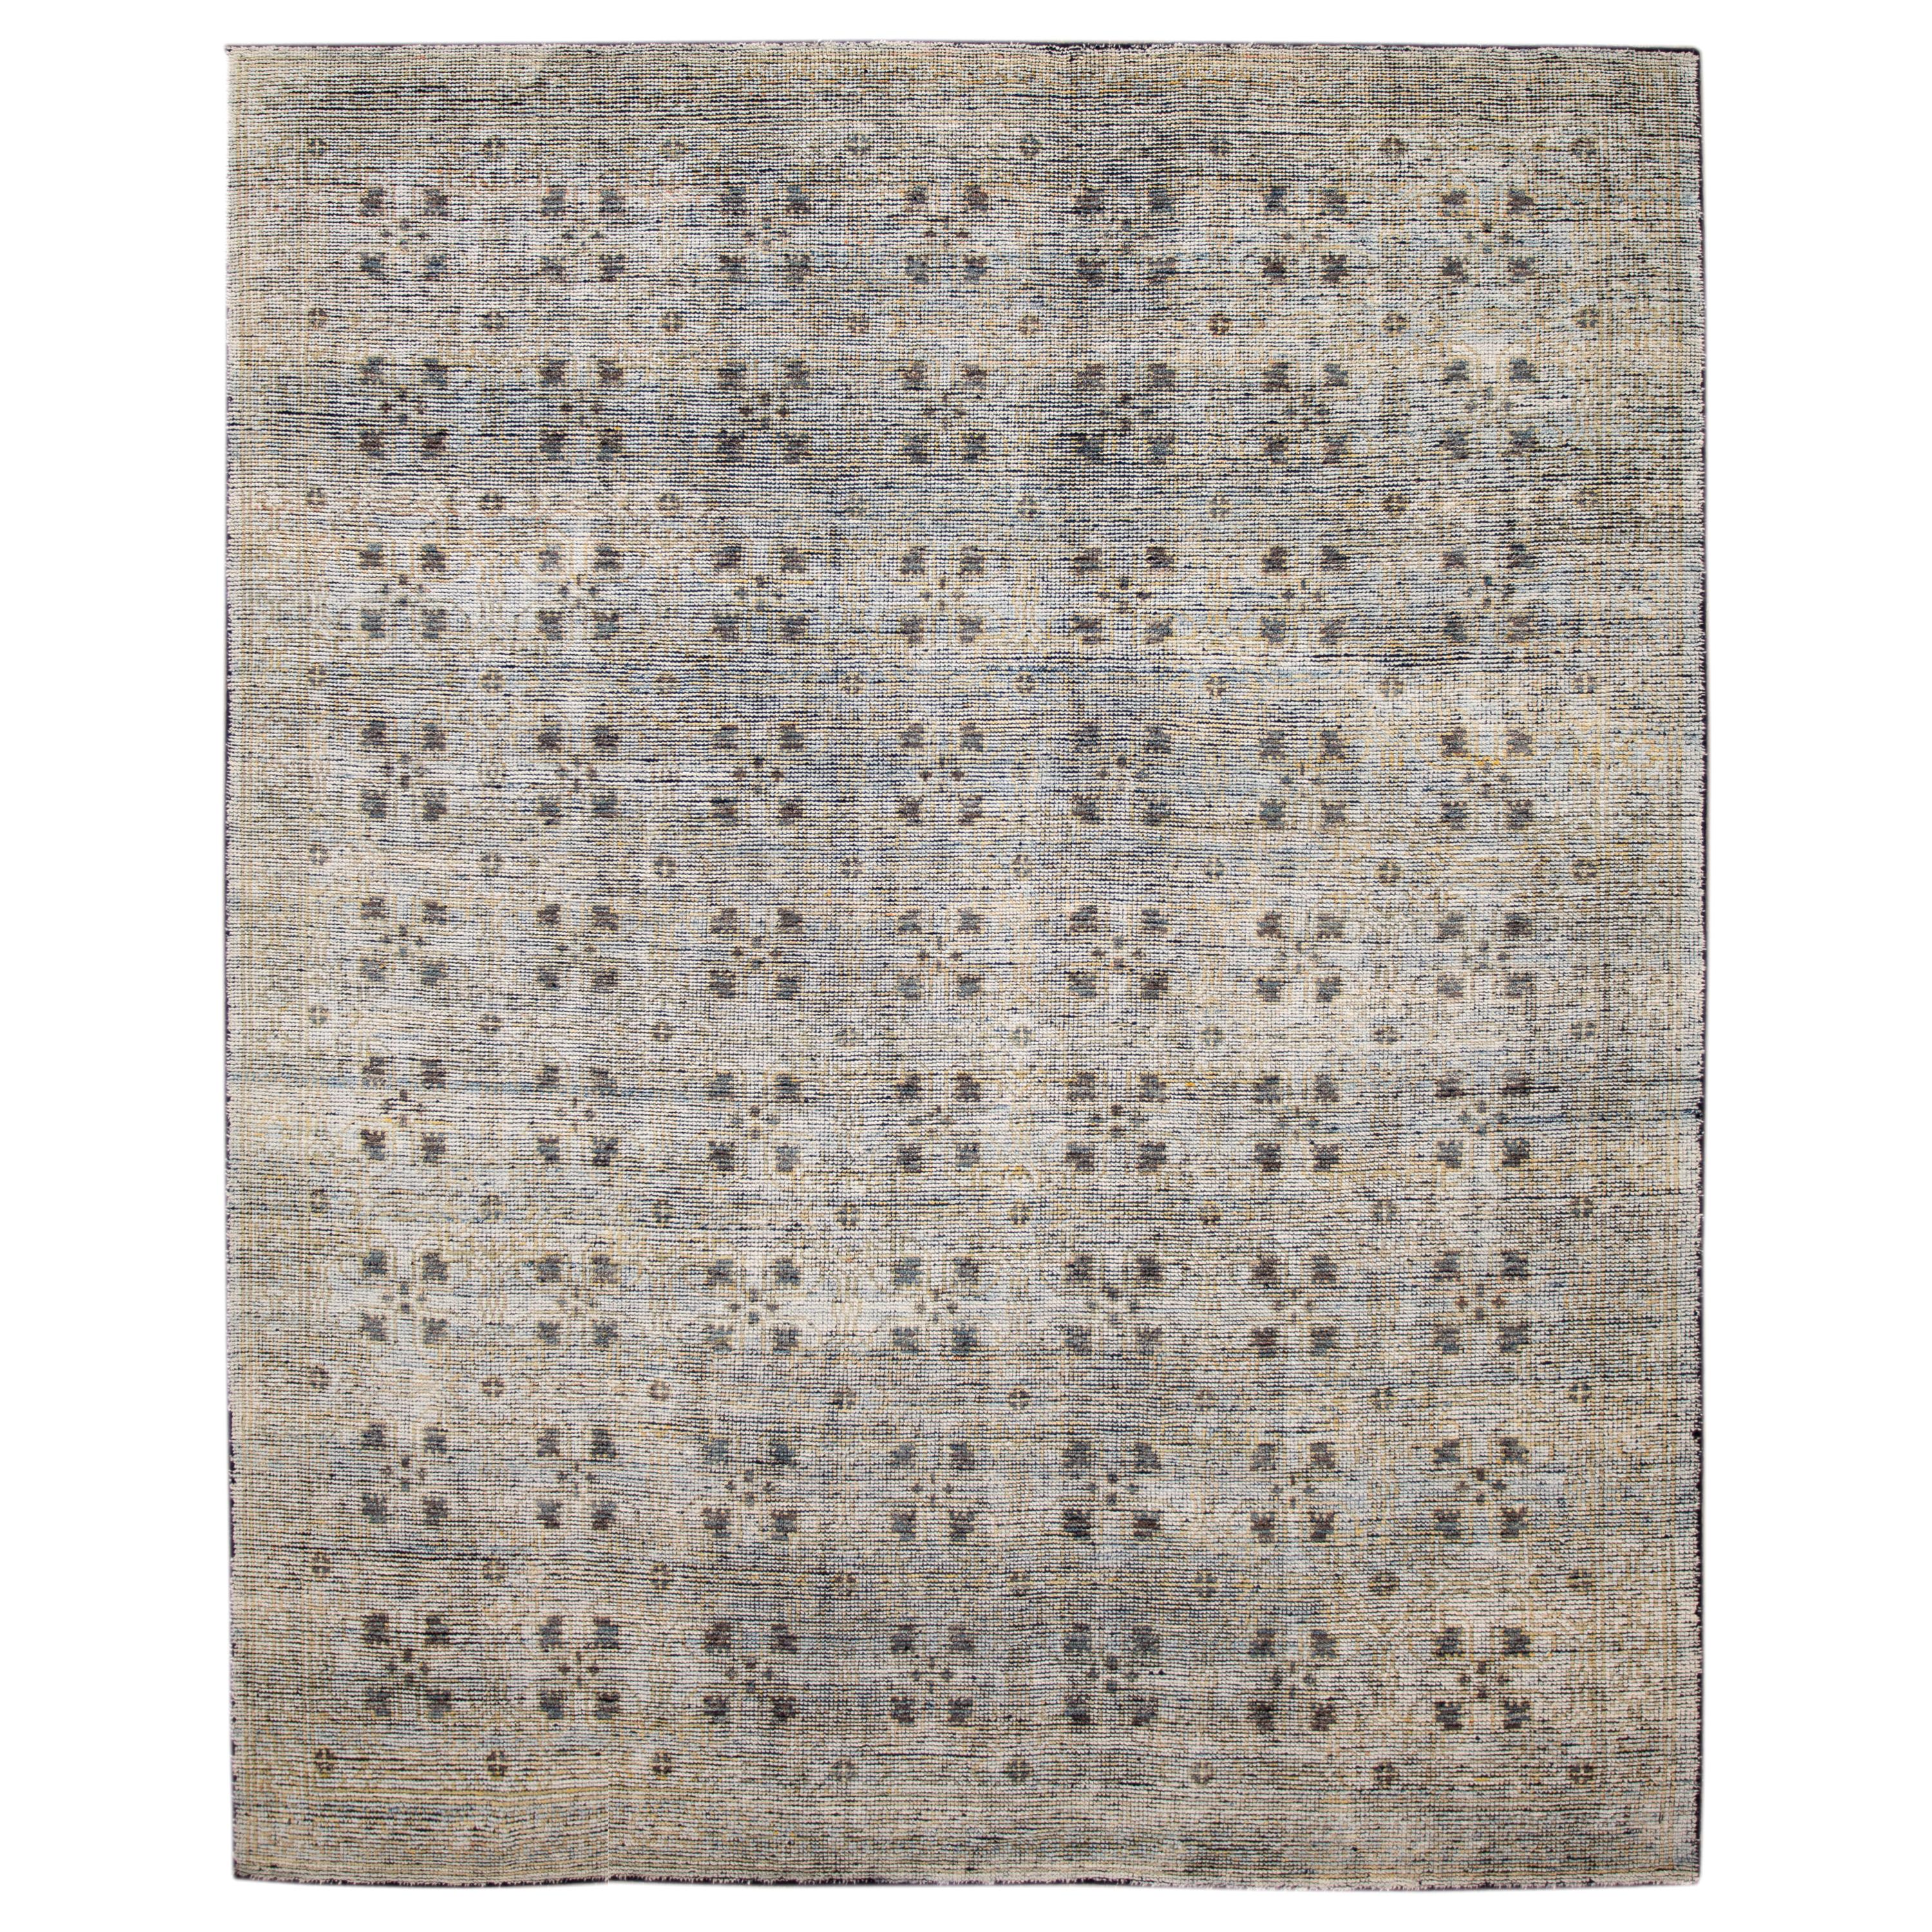 Modern Soumak Style Handmade Geometric Gray Wool Rug